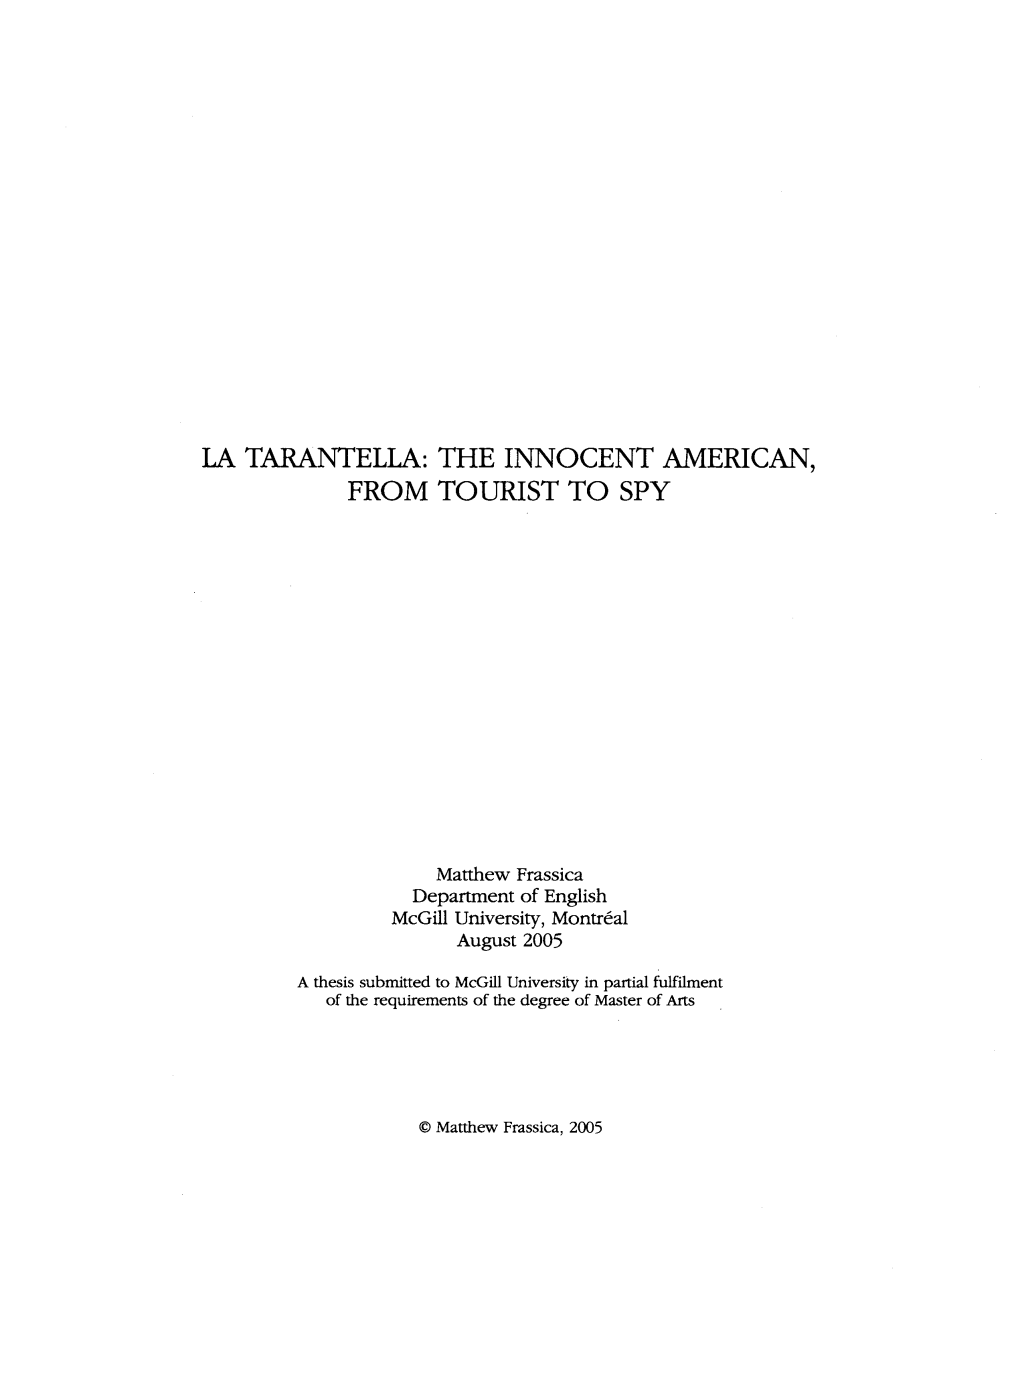 La Tarantella: the Innocent American, from Tourist to Spy